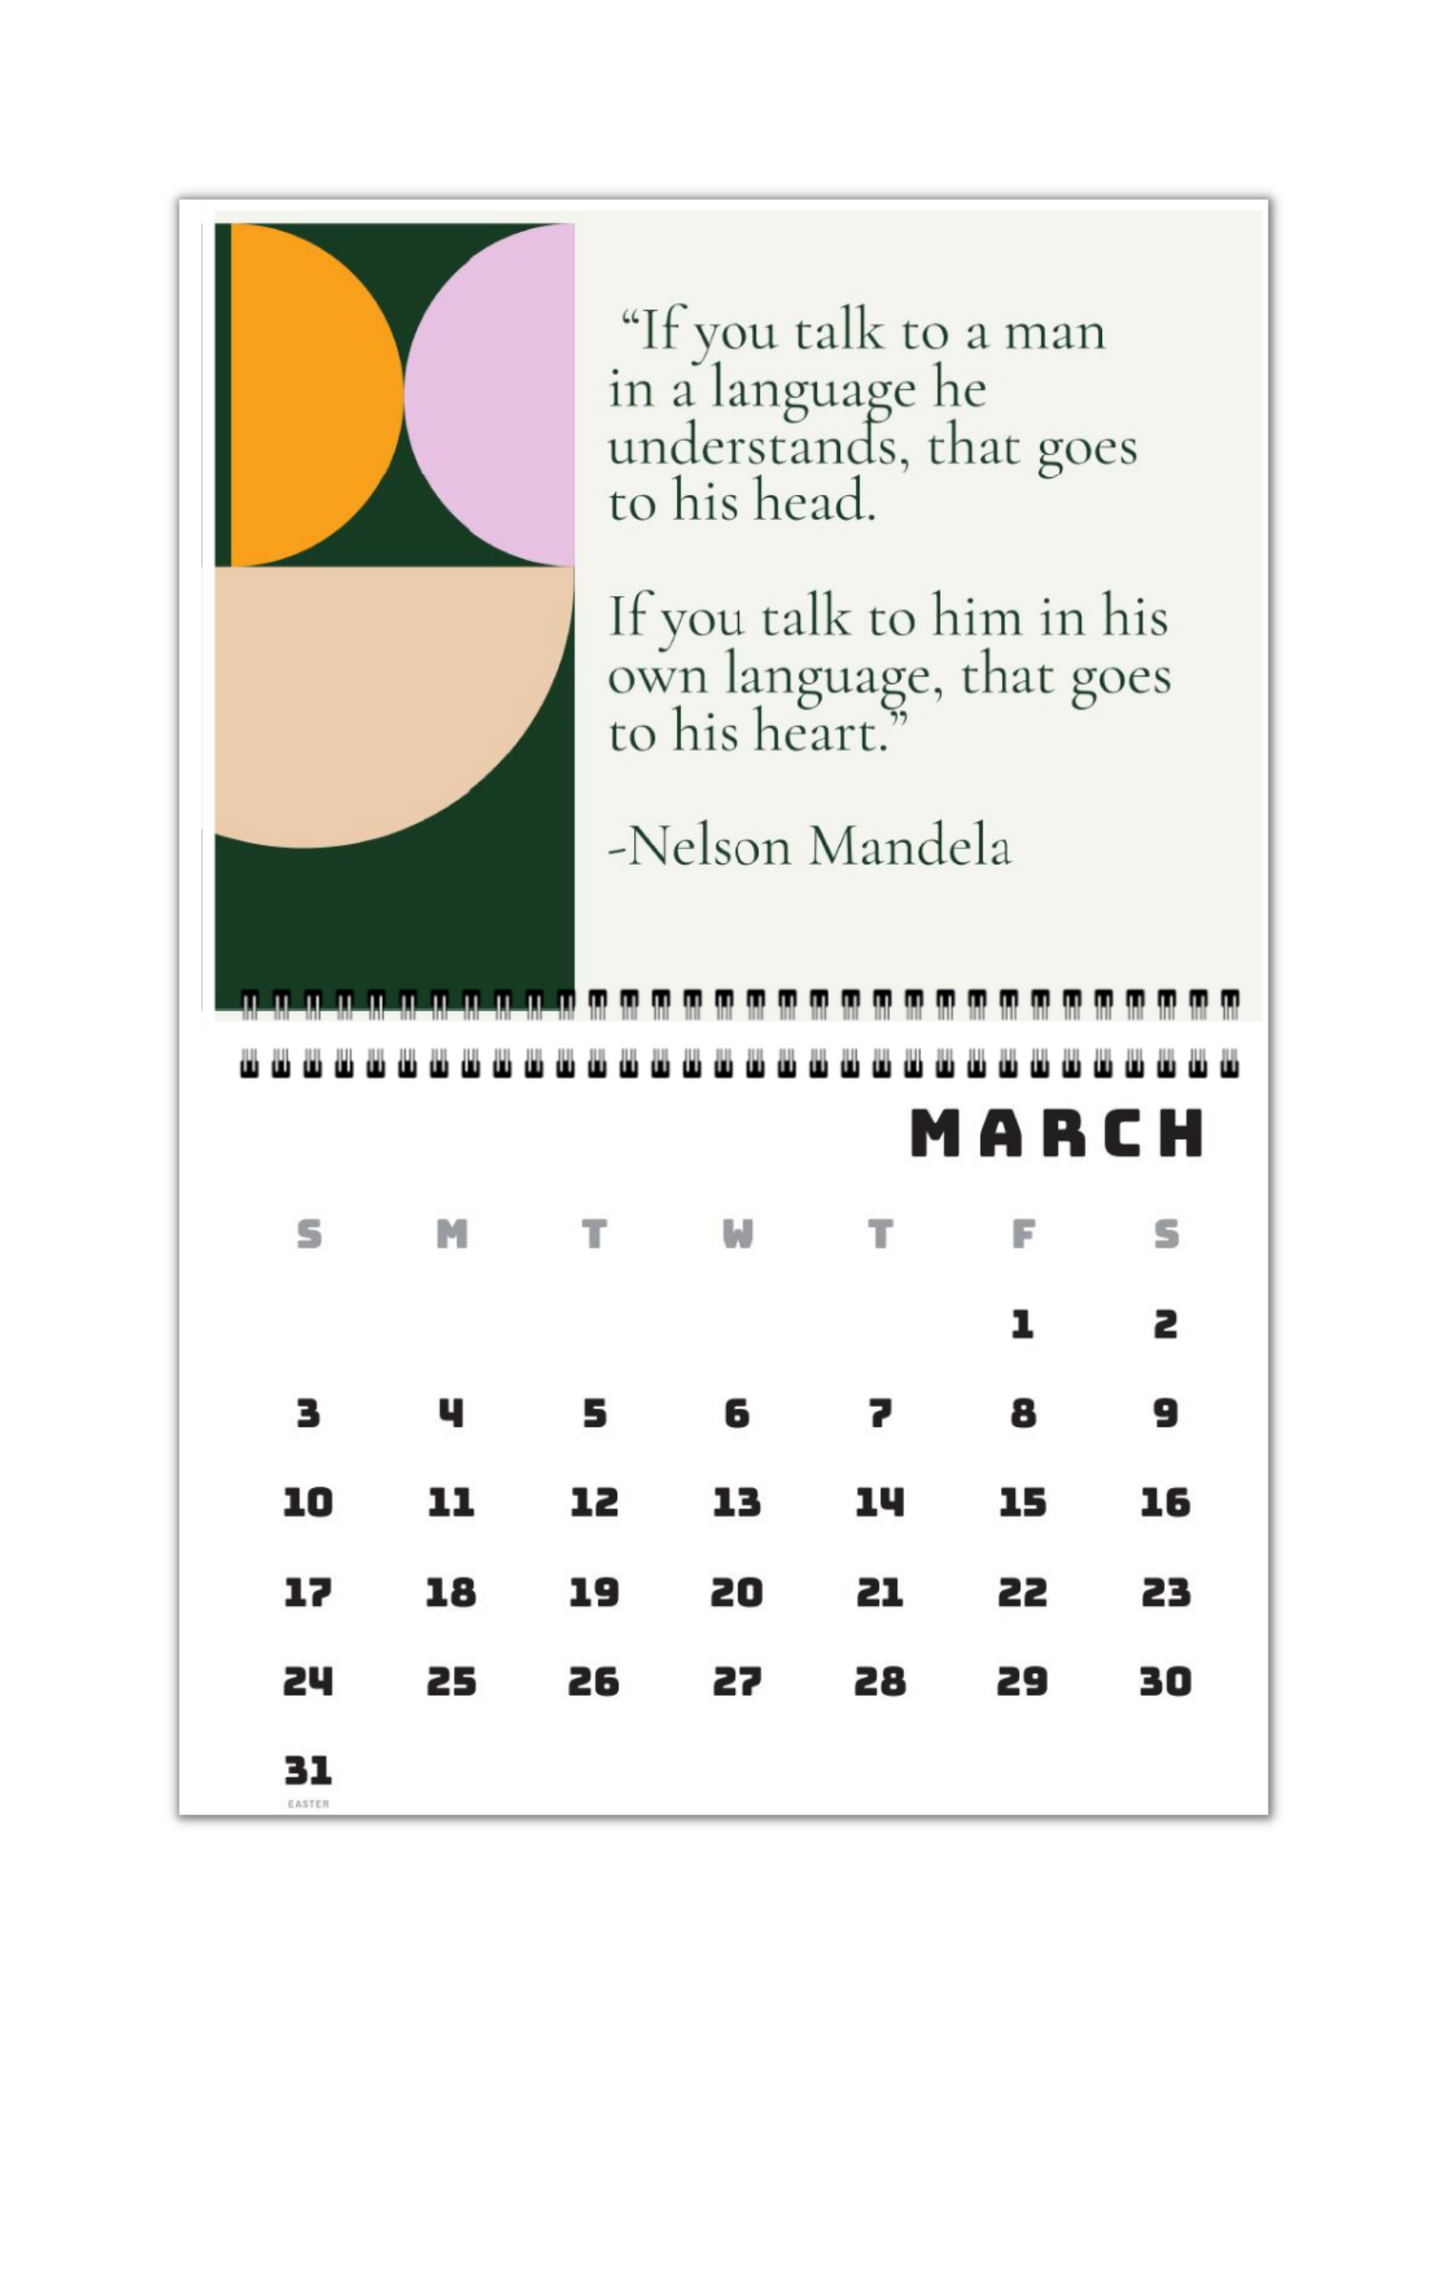 Academic Year Language Quote Calendar 2023 -24